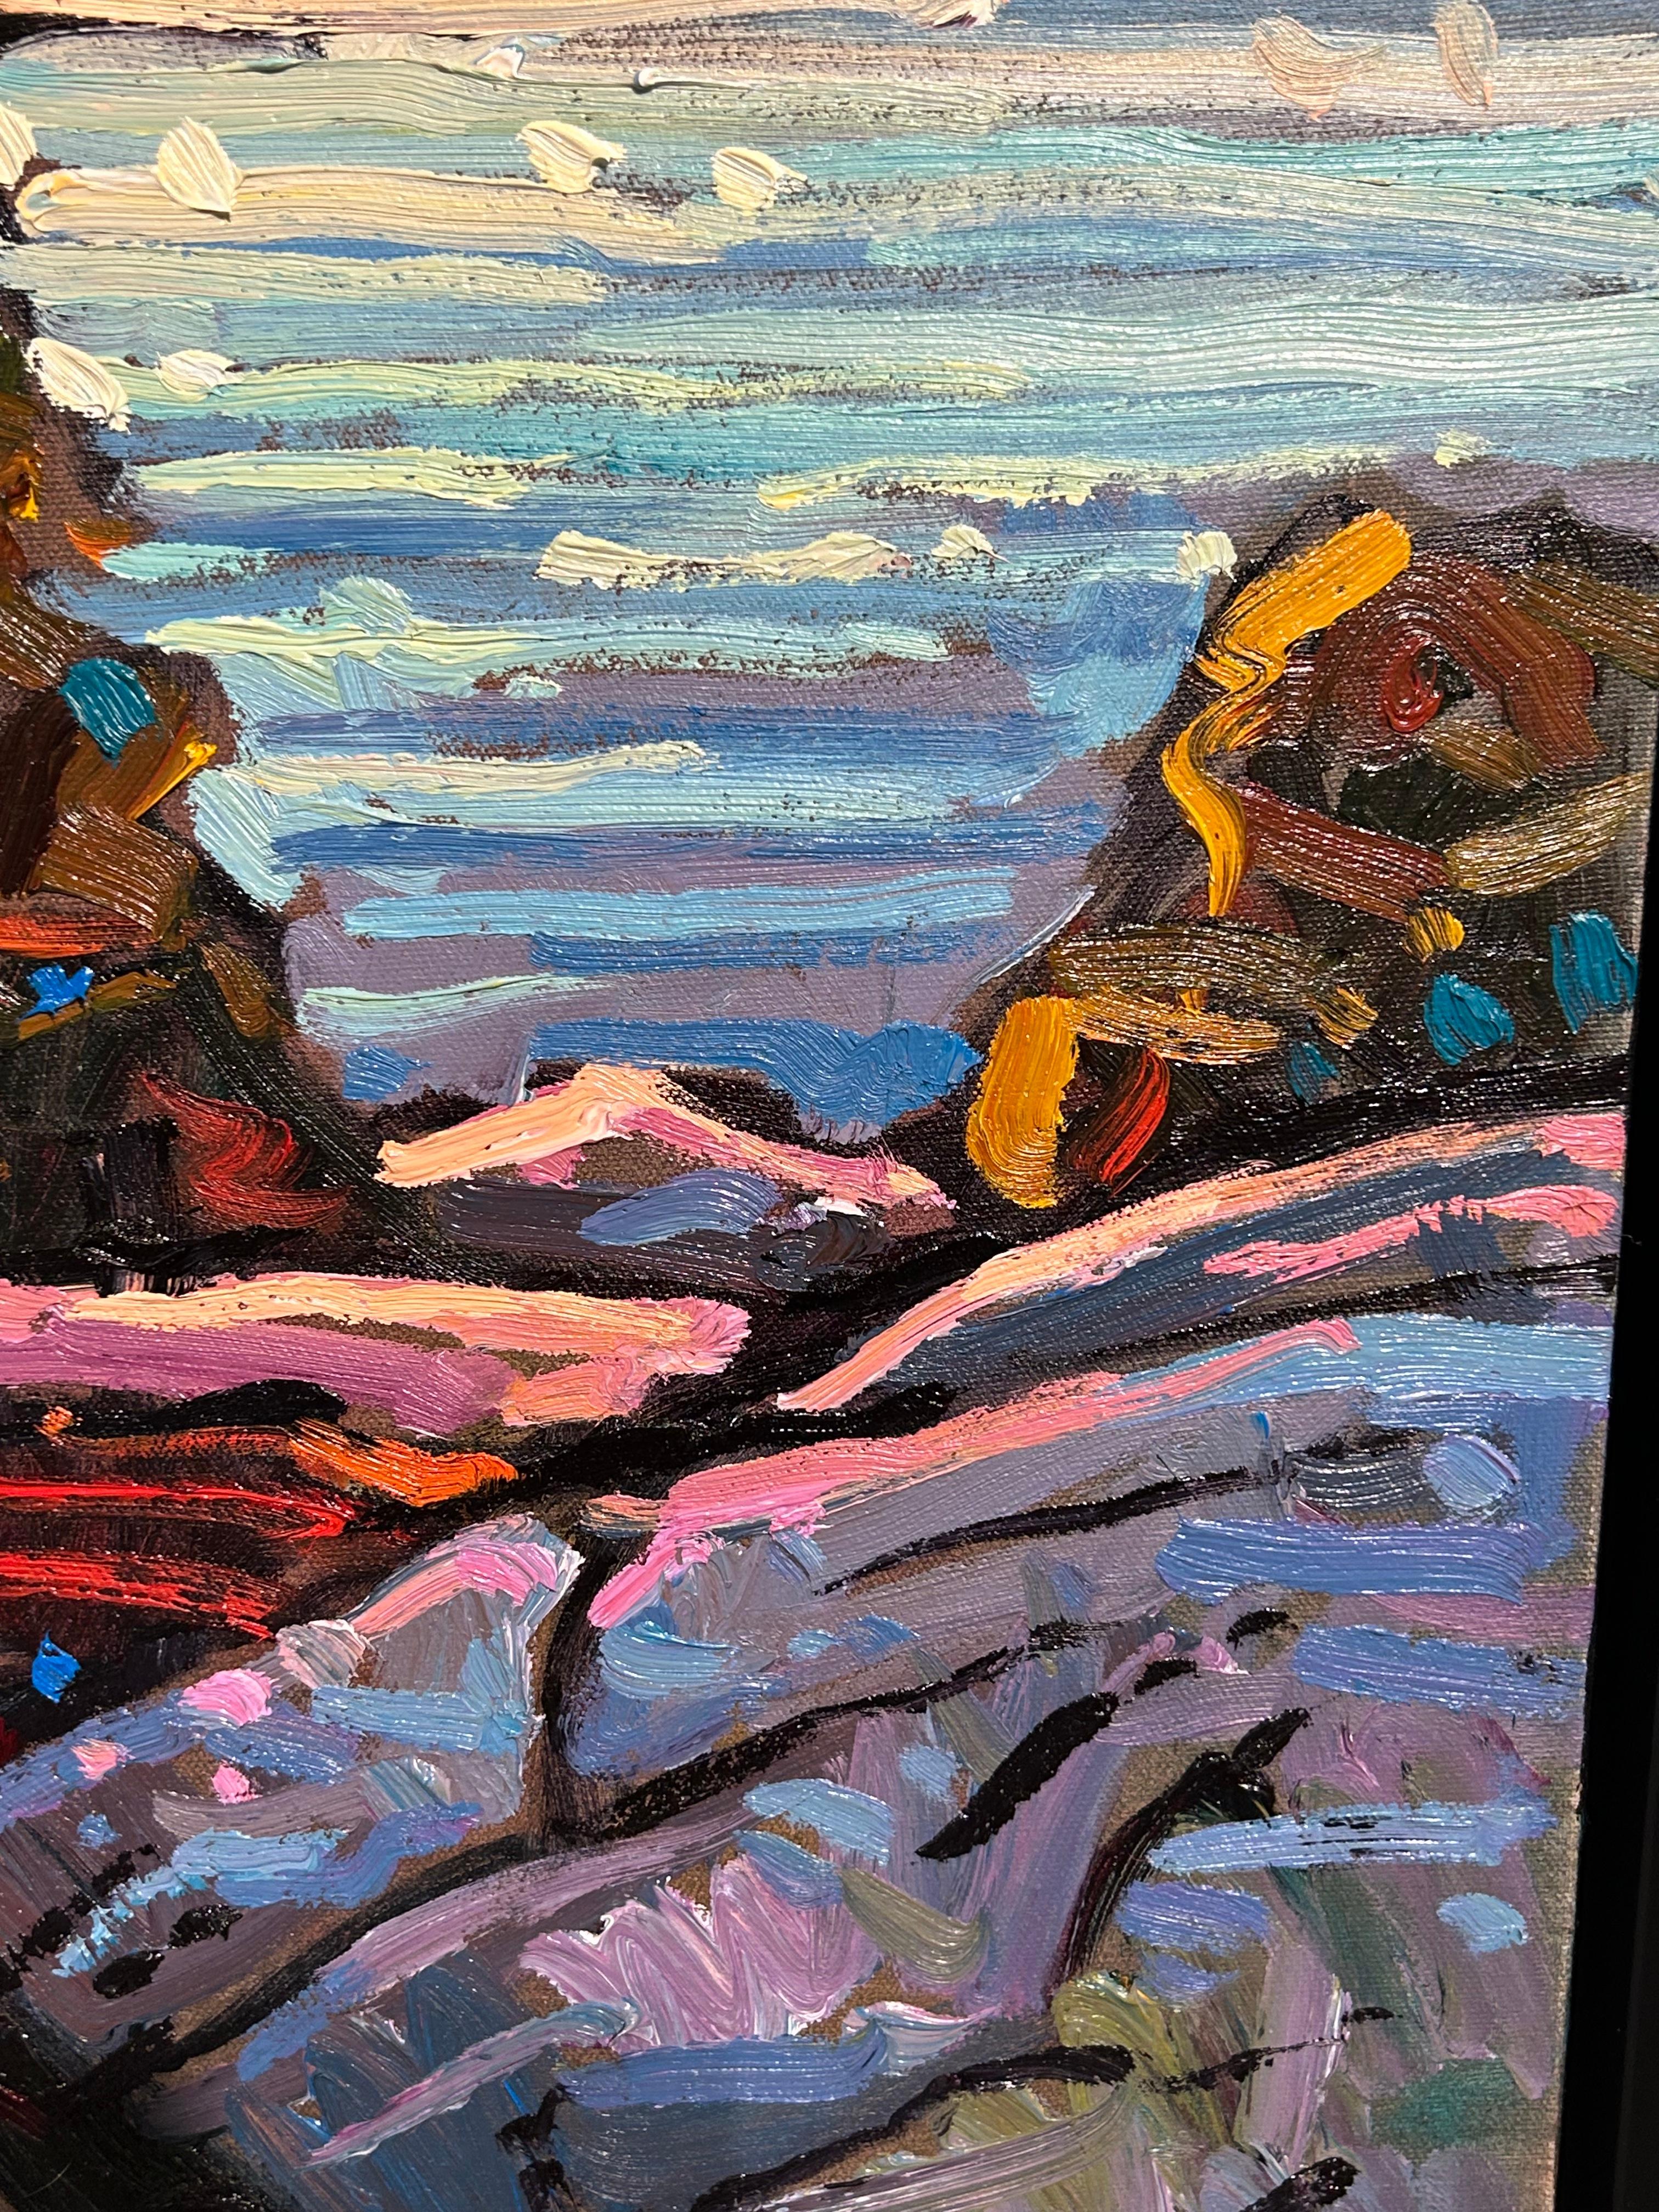 Contemporary Impressionist style landscape 'Noble Pines at Sunset' Öl auf Leinwand (Post-Impressionismus), Painting, von Ryan A. Sobkovich